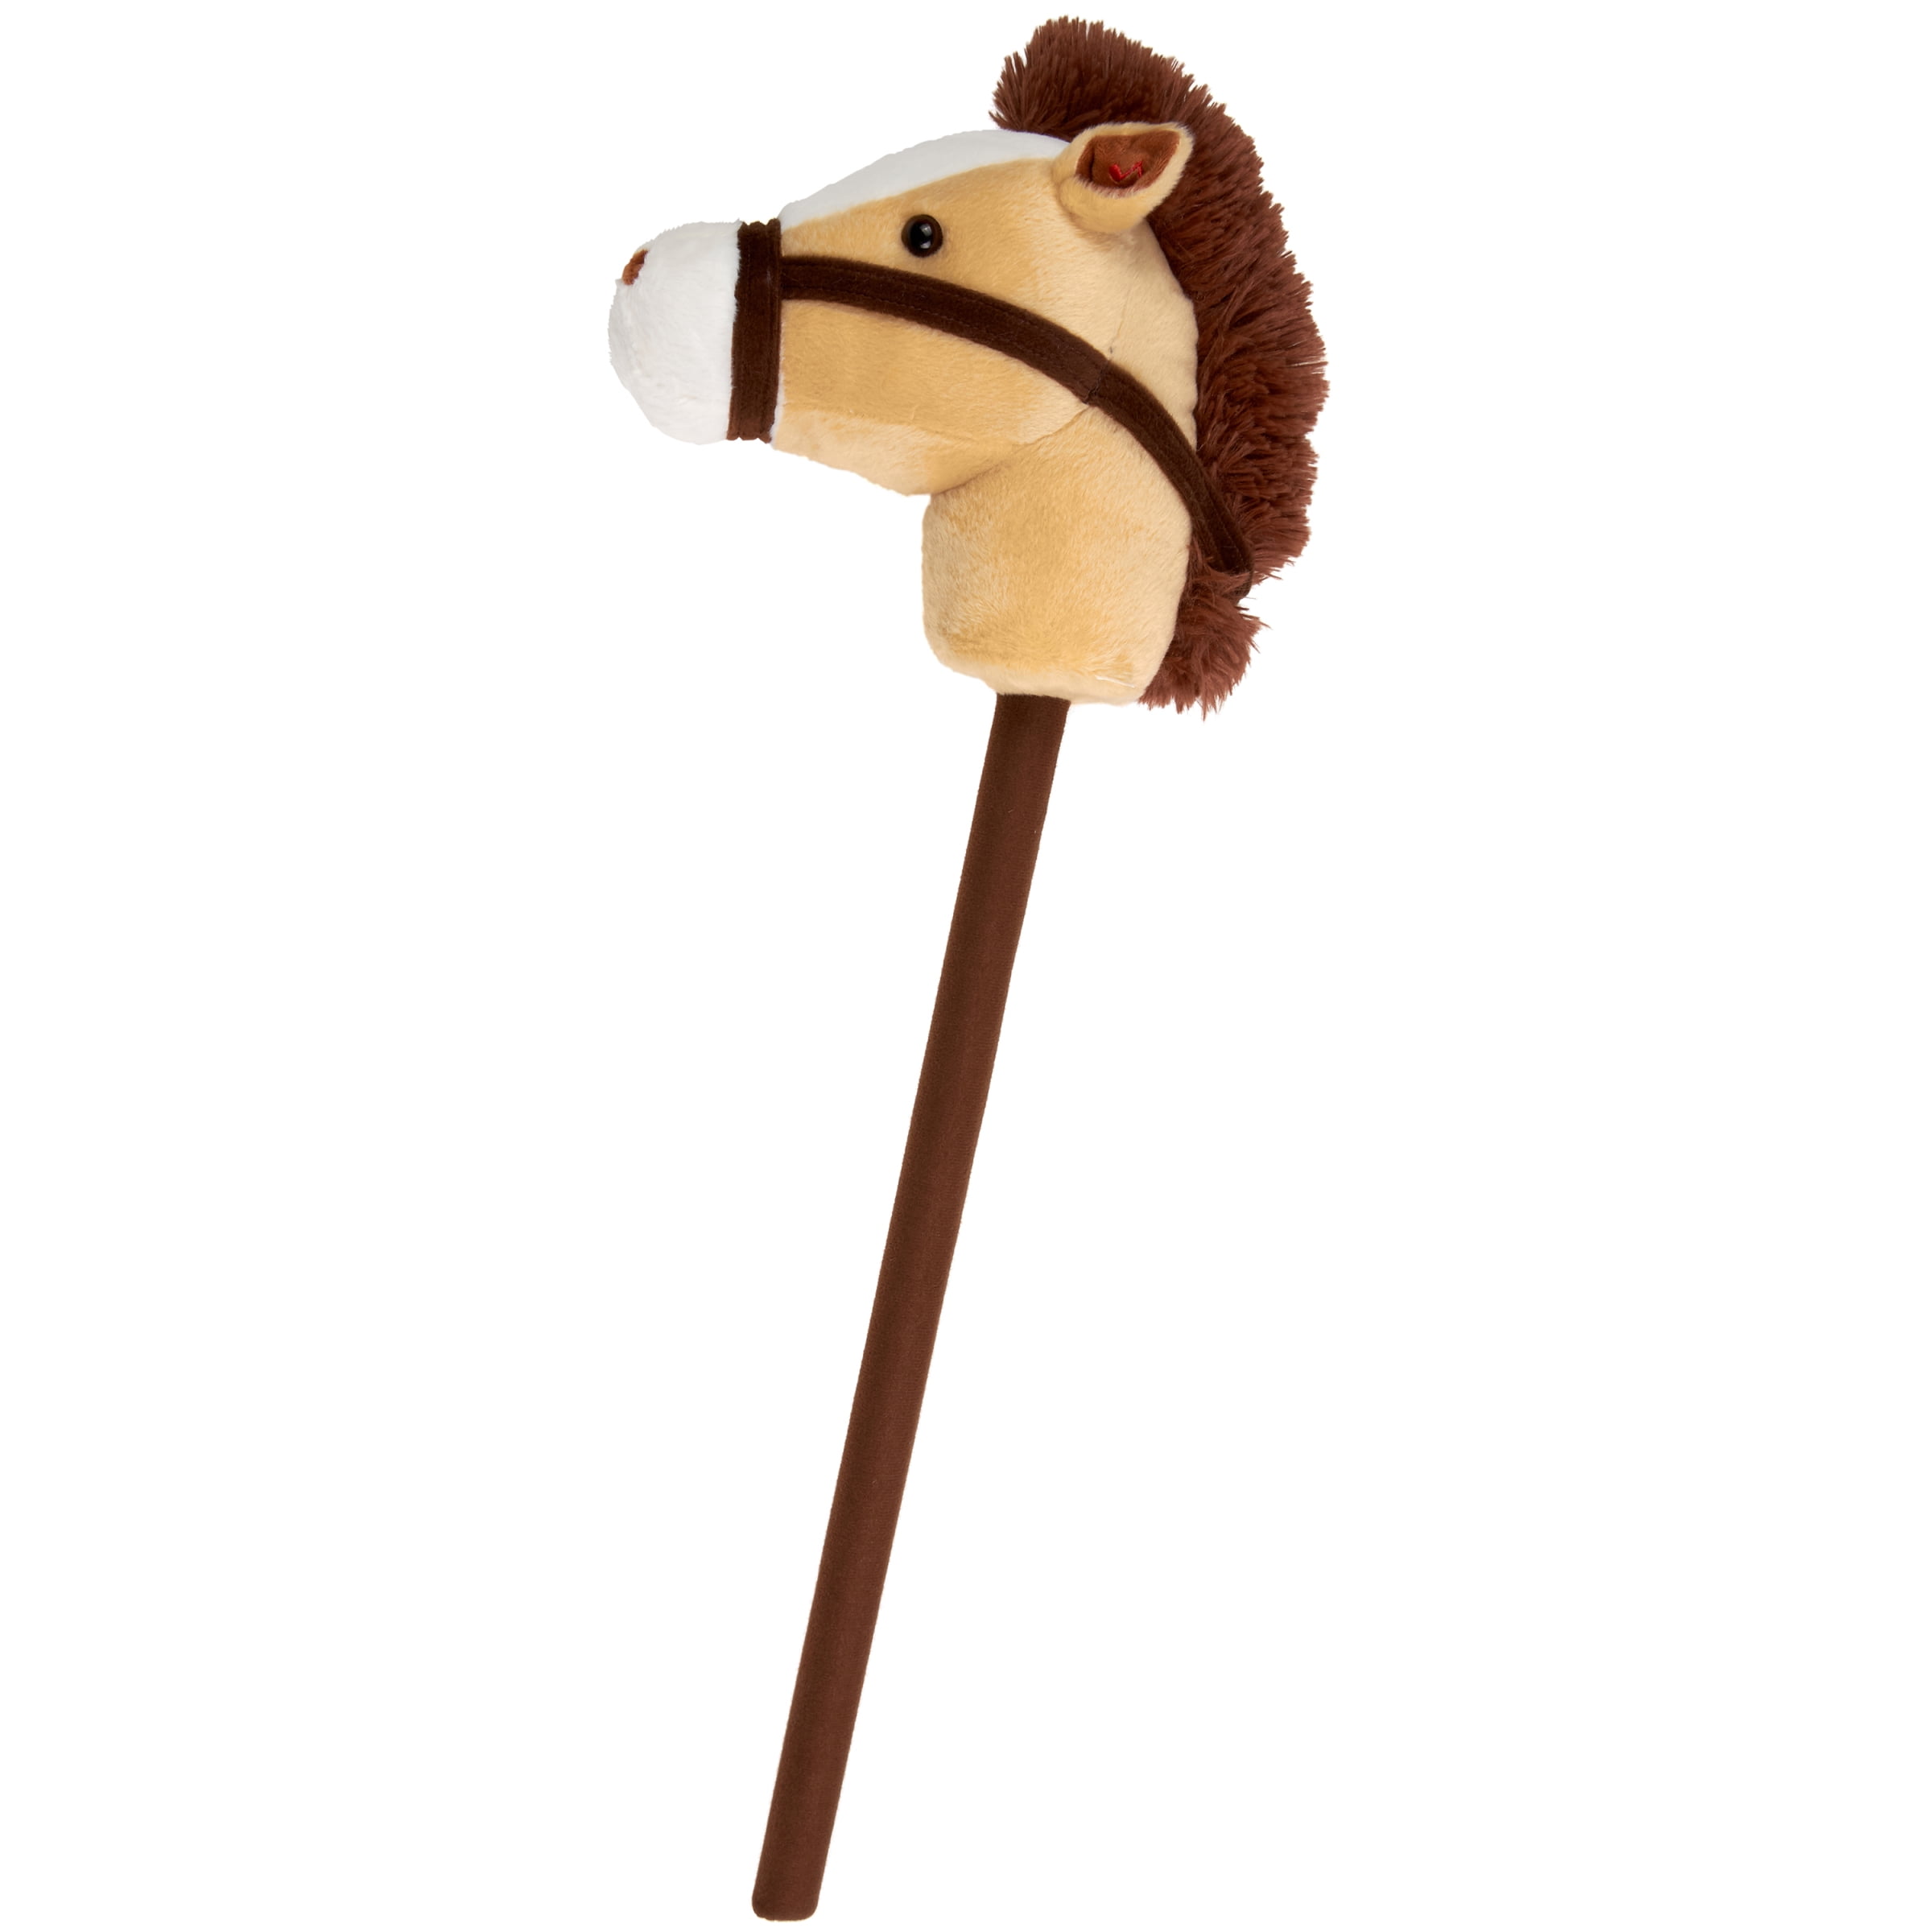 stuffed animal on a stick leash